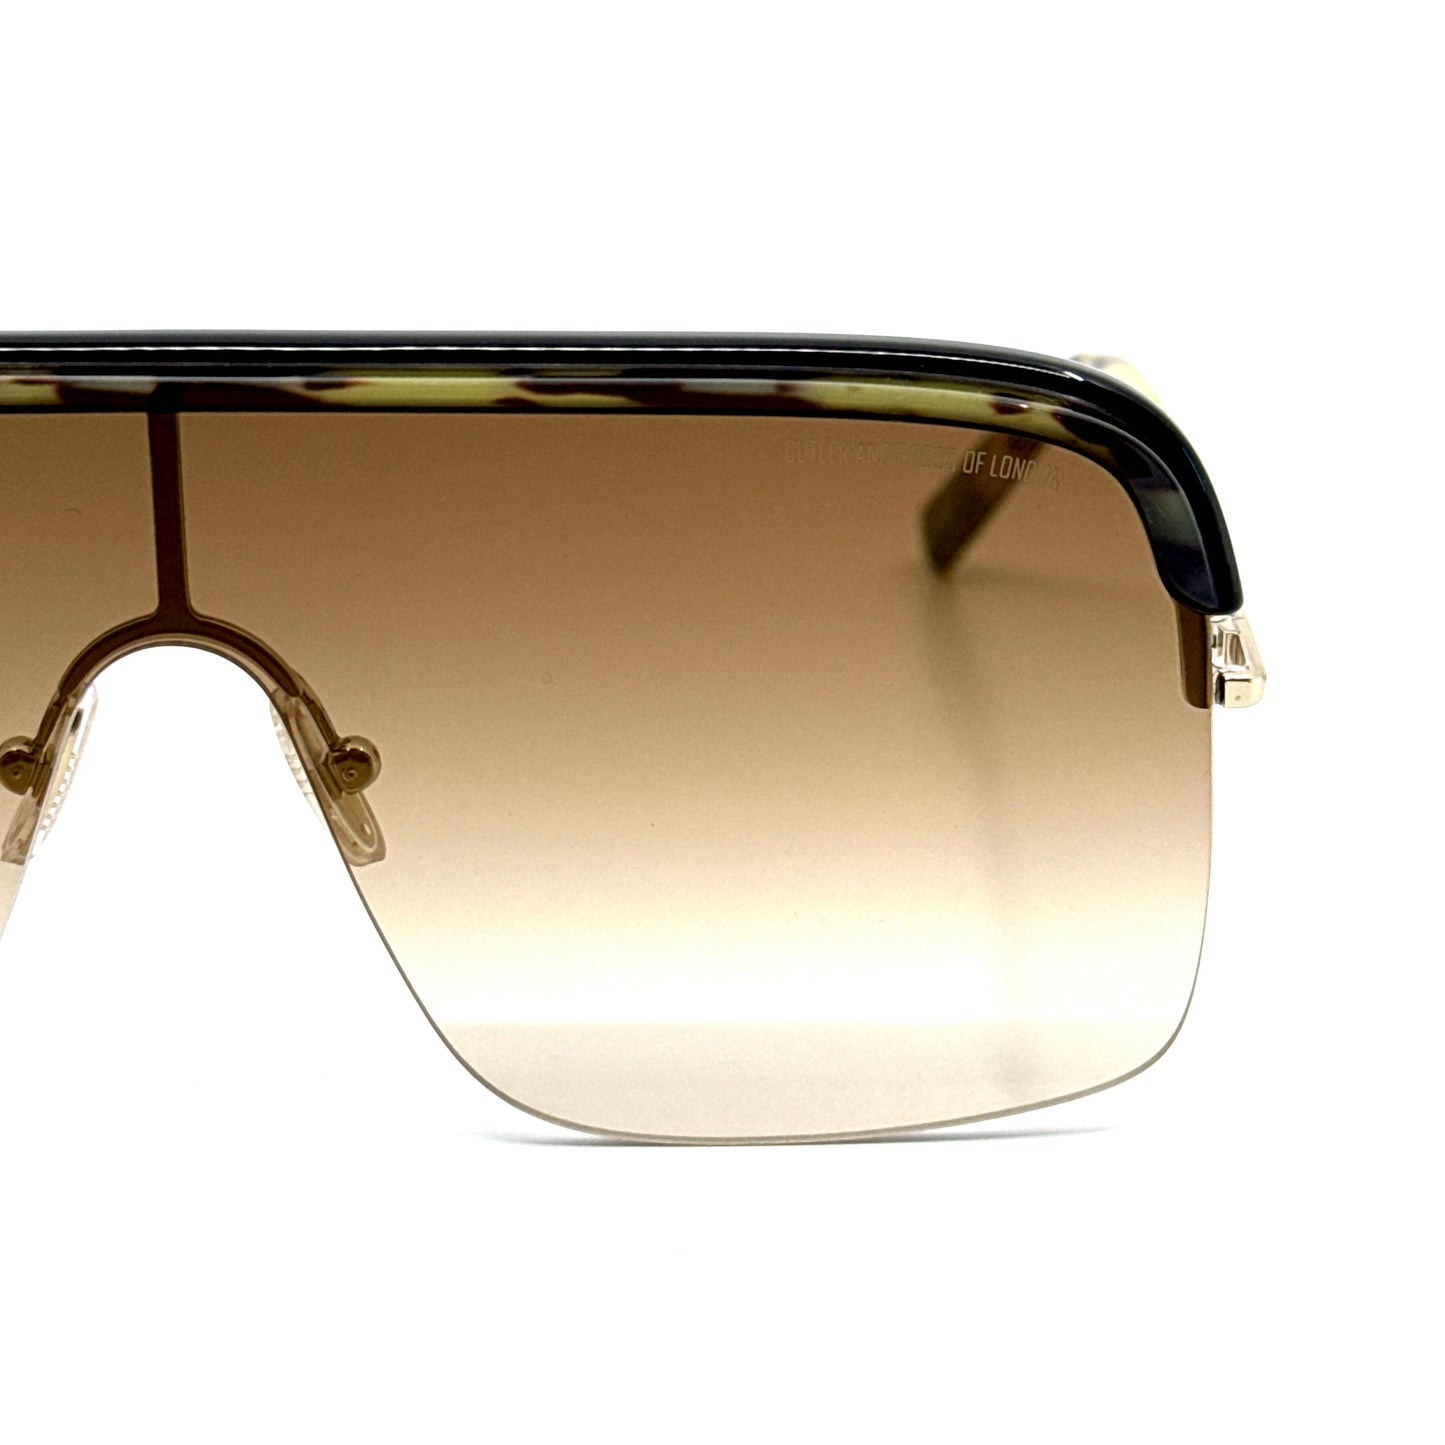 CUTLER AND GROSS Sunglasses M1328 C01